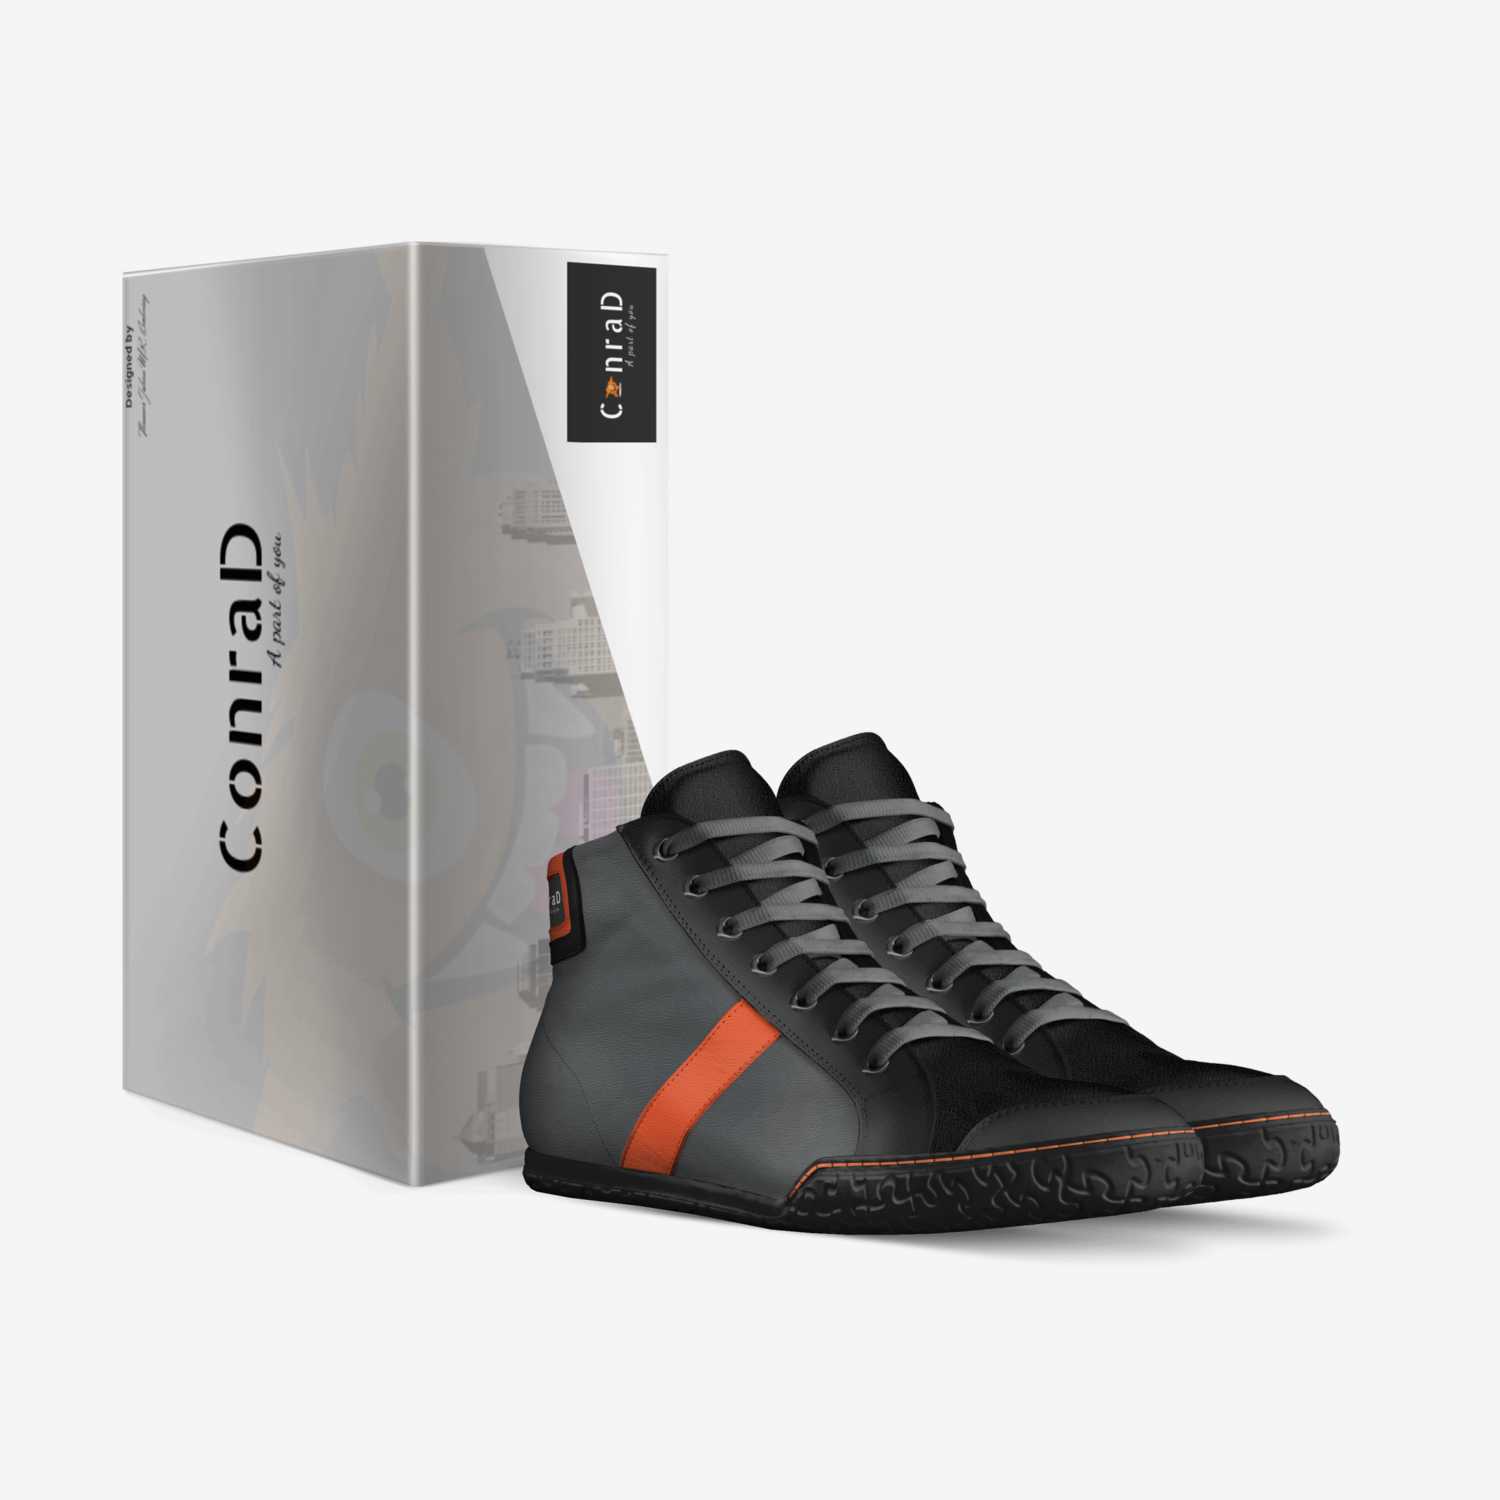 ConraD custom made in Italy shoes by Thomas J. M. R. Bæhring | Box view